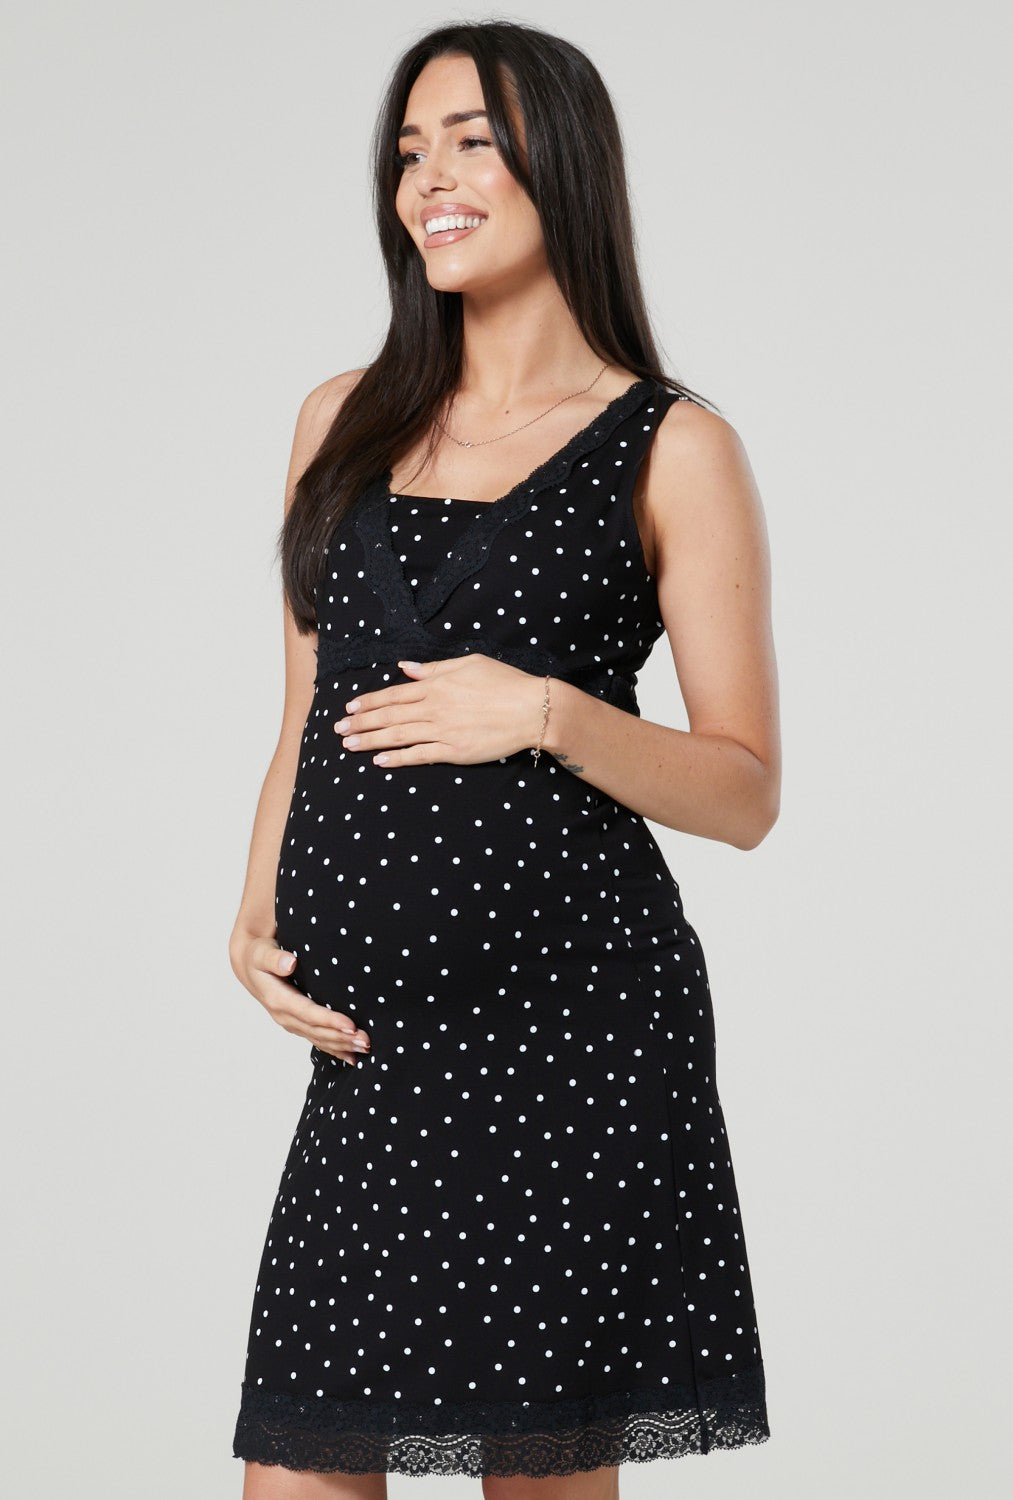 Maternity Nursing Nightdress Lace Details